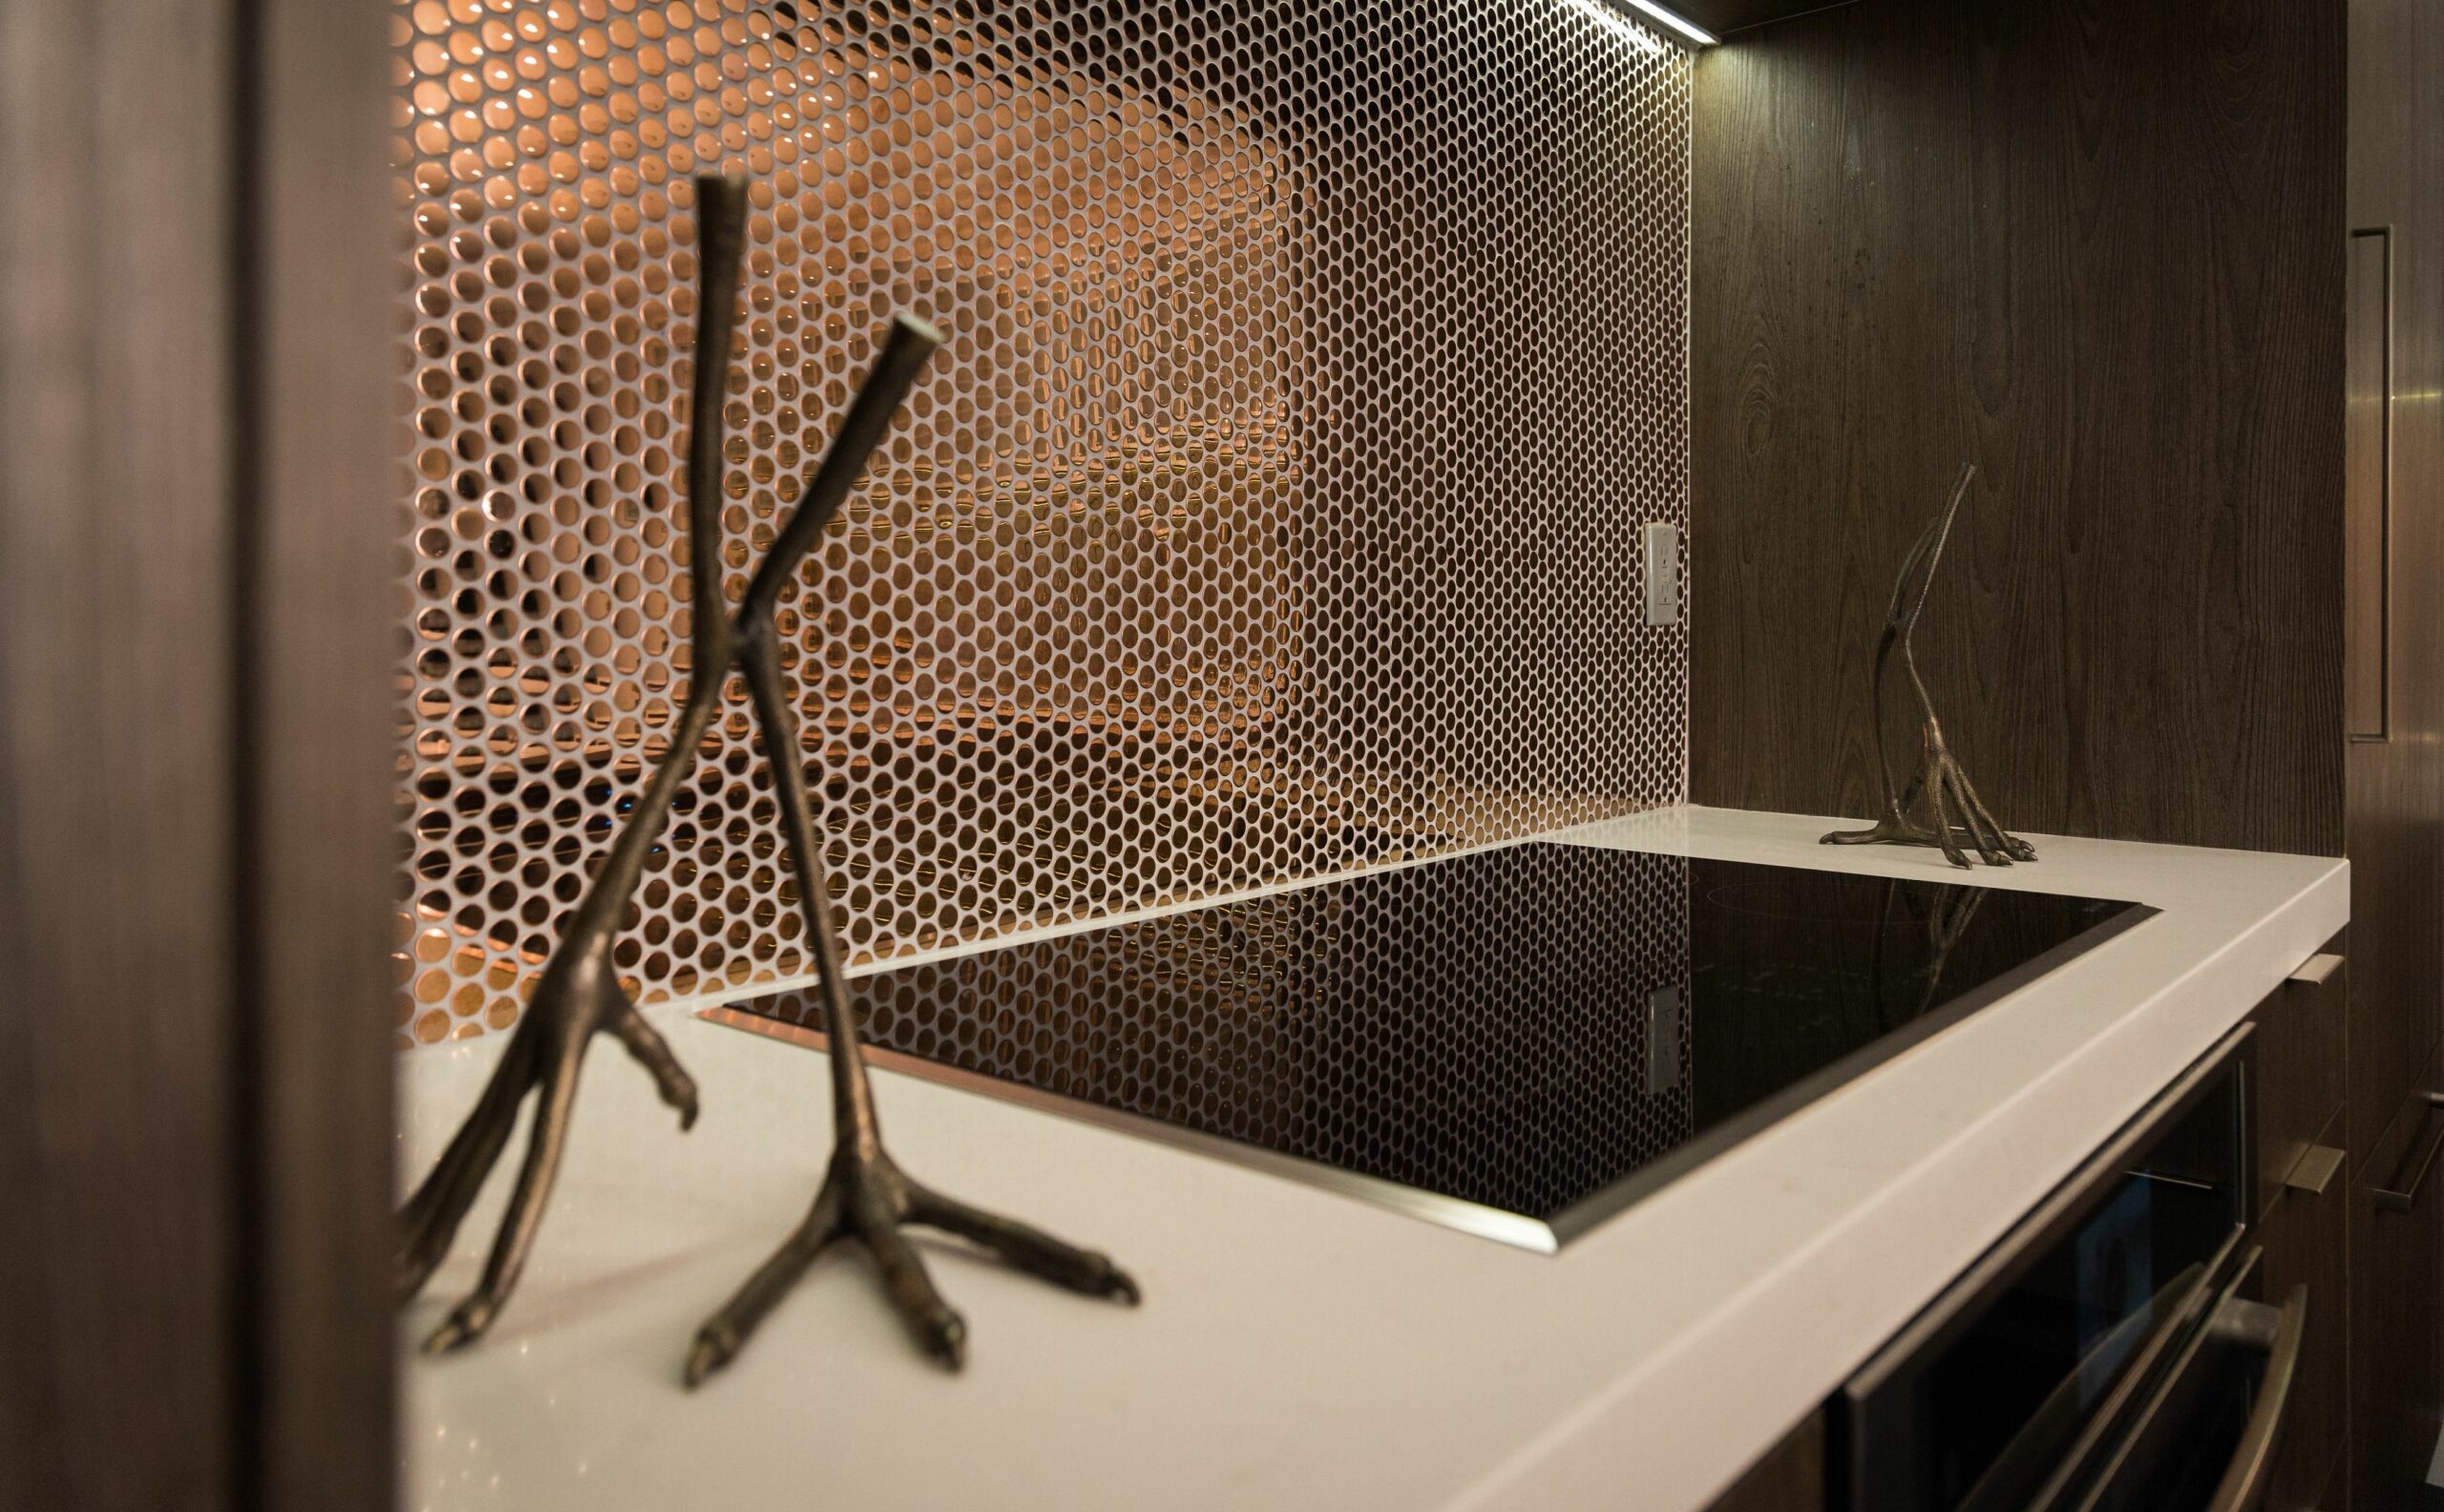 Modern kitchen with decorative metal backsplash and artistic sculptures.